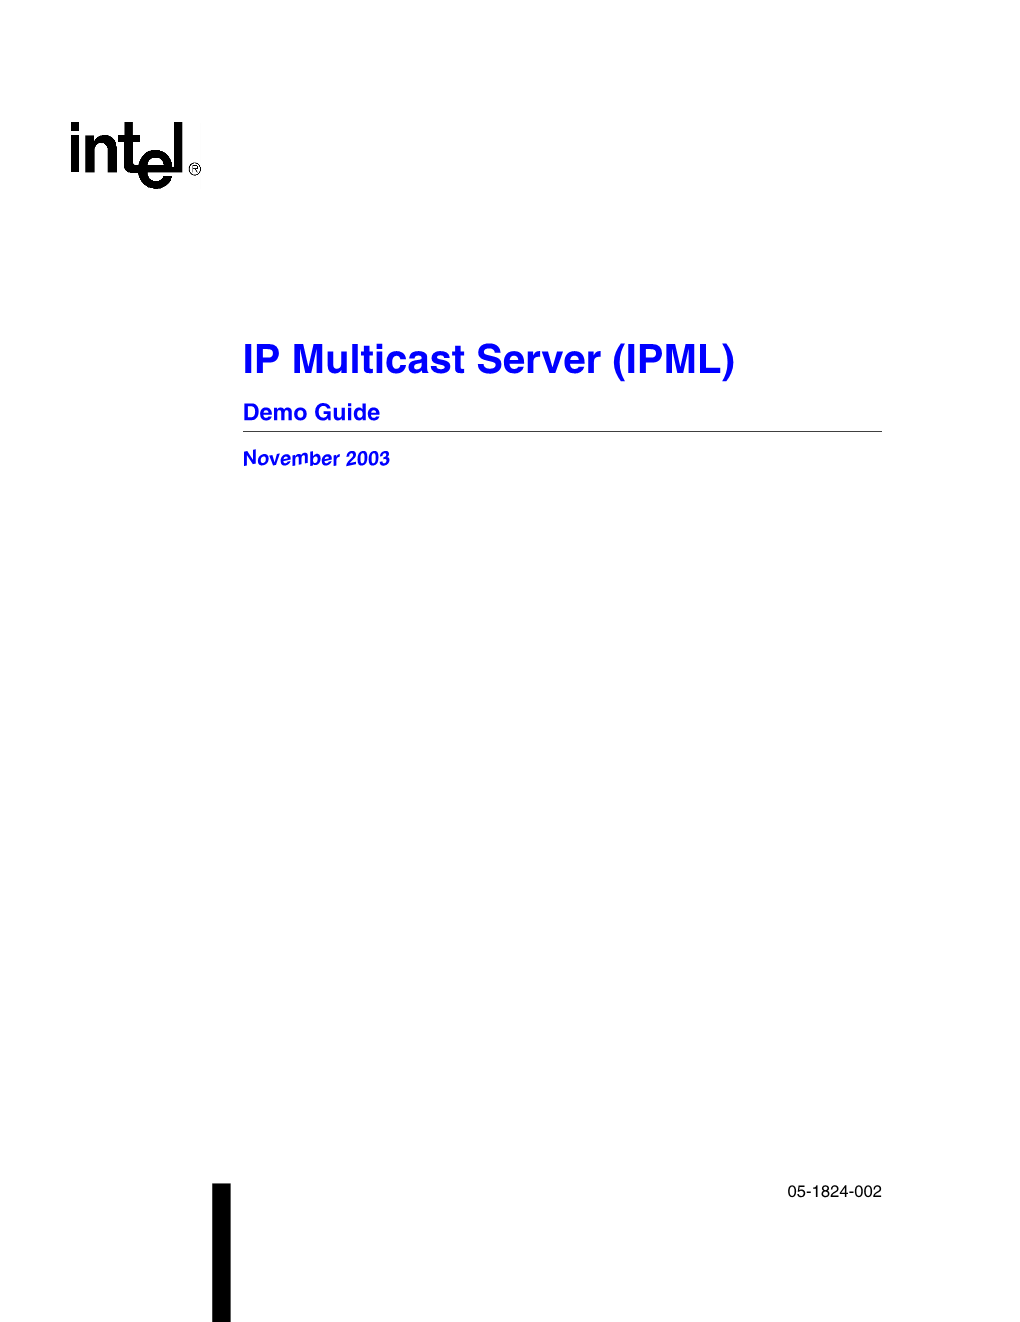 IP Multicast Server (IPML) Demo Guide